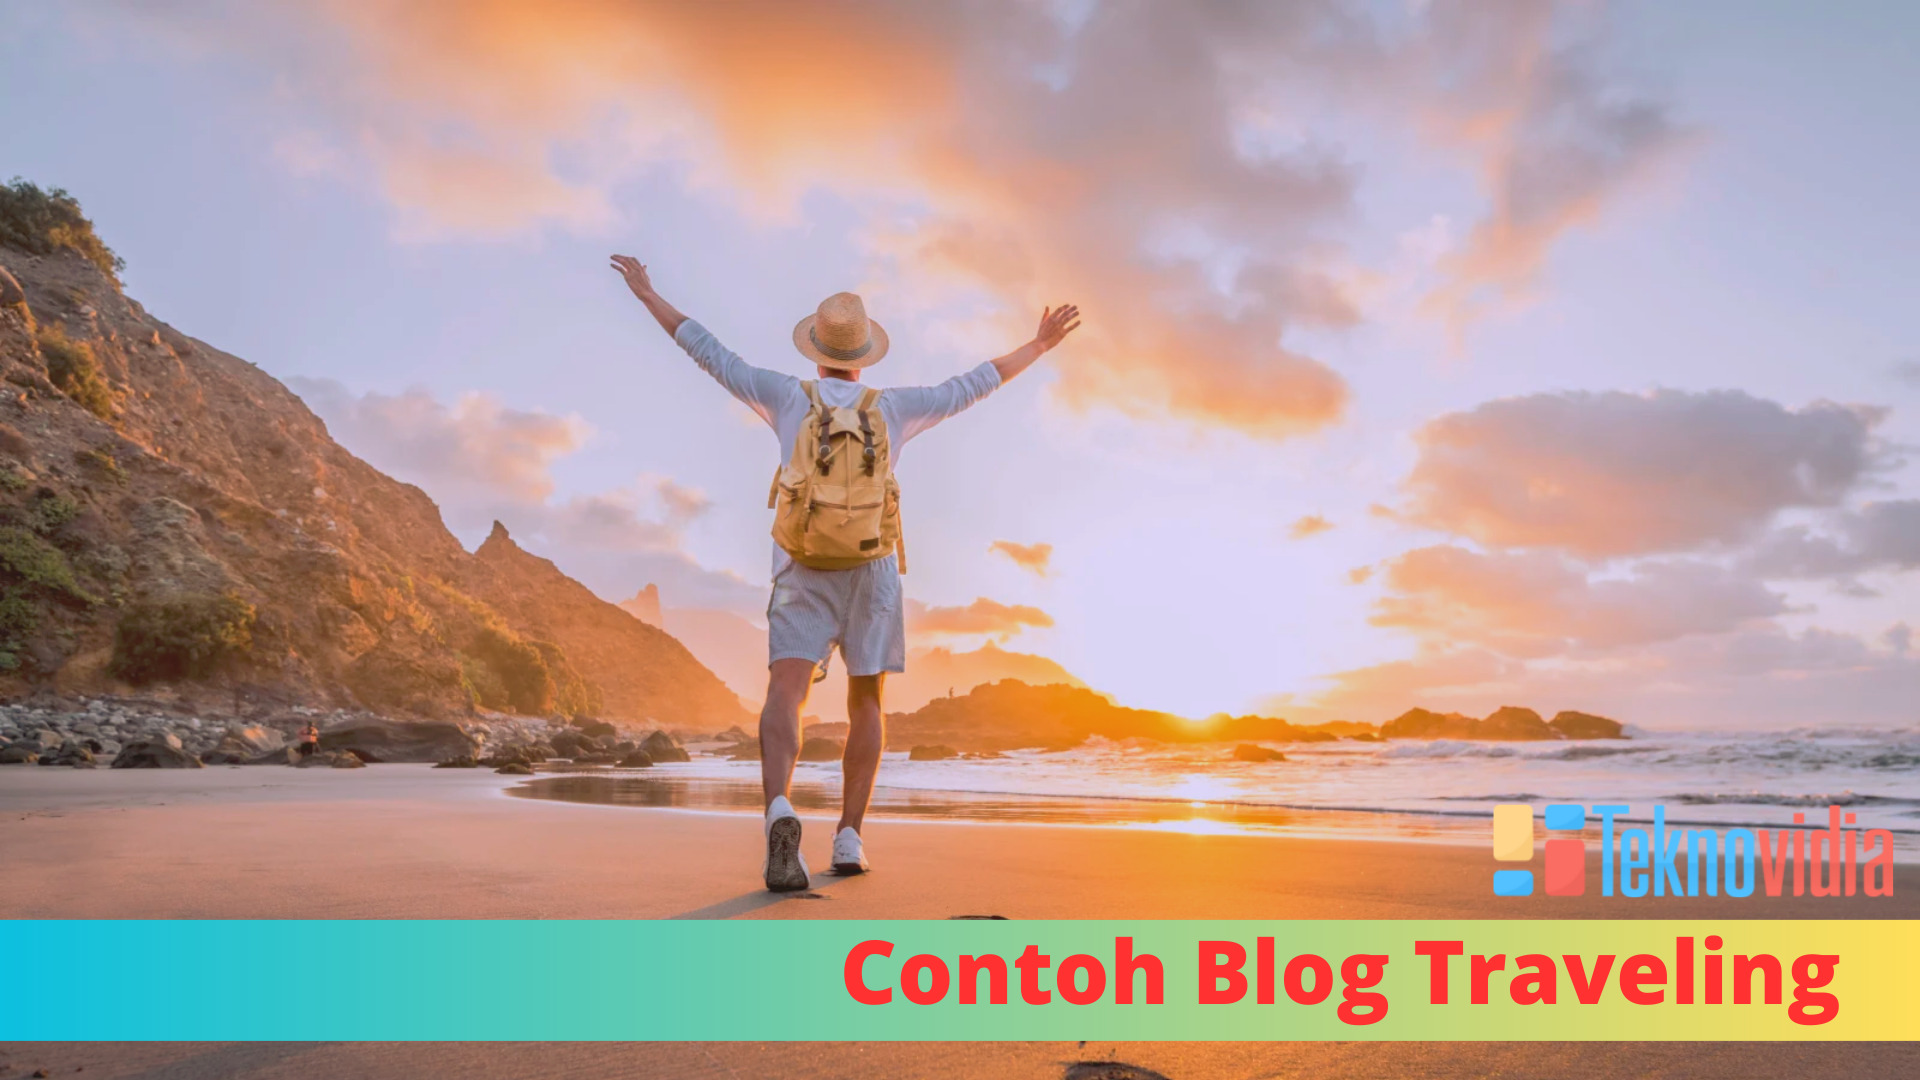 Contoh Blog Traveling